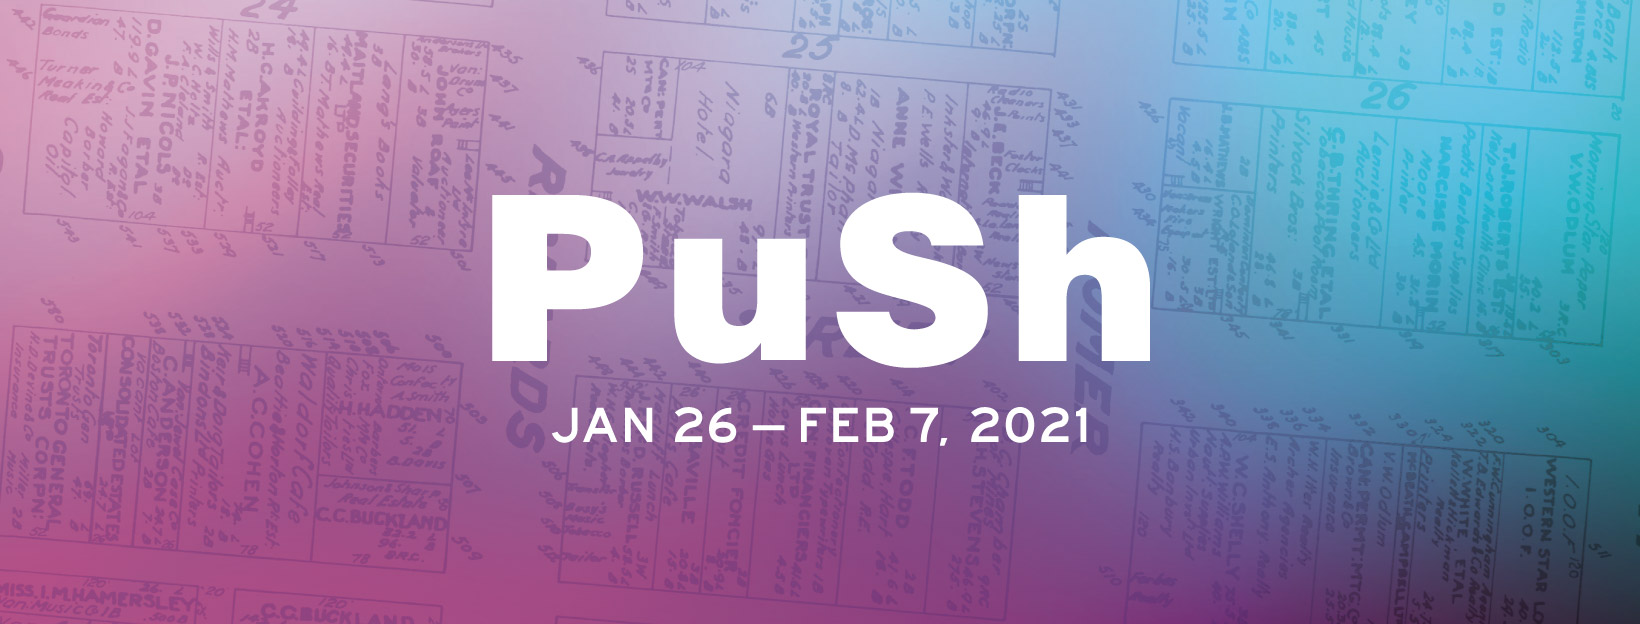 21 Push Festival Dates Announced Push Festival